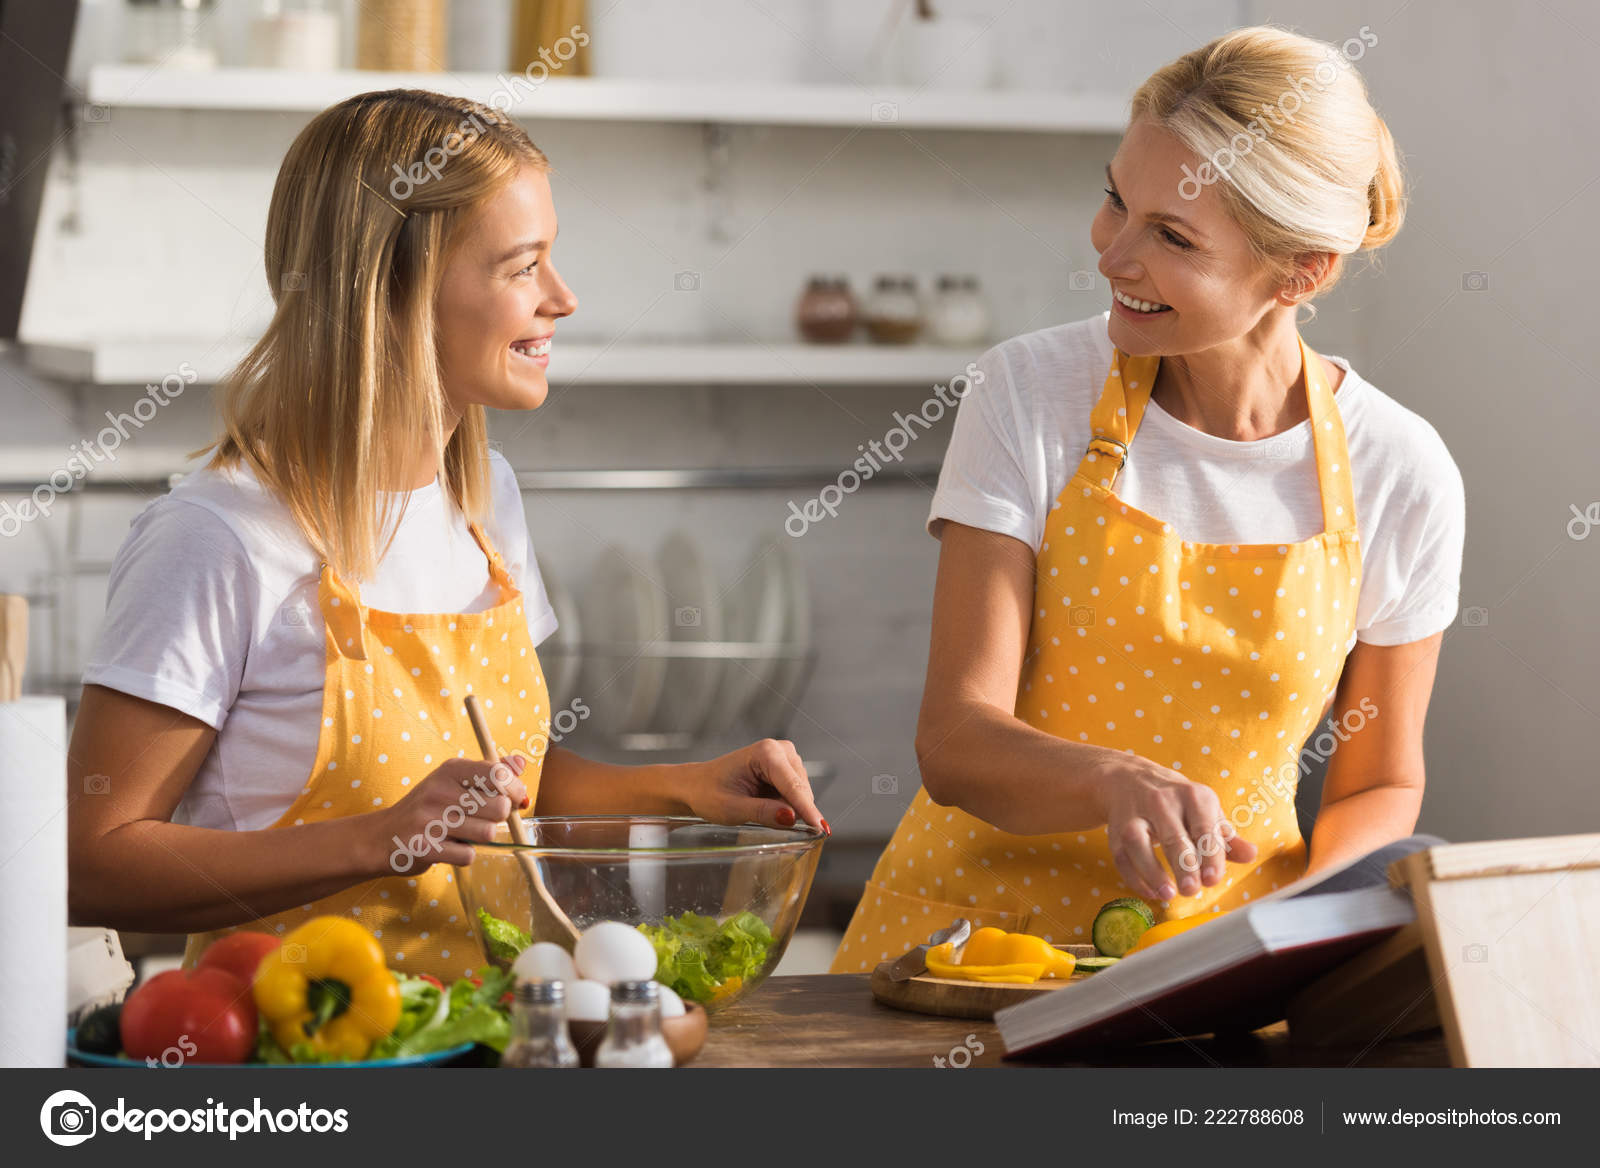 https://st4.depositphotos.com/12985790/22278/i/1600/depositphotos_222788608-stock-photo-happy-adult-mother-daughter-aprons.jpg